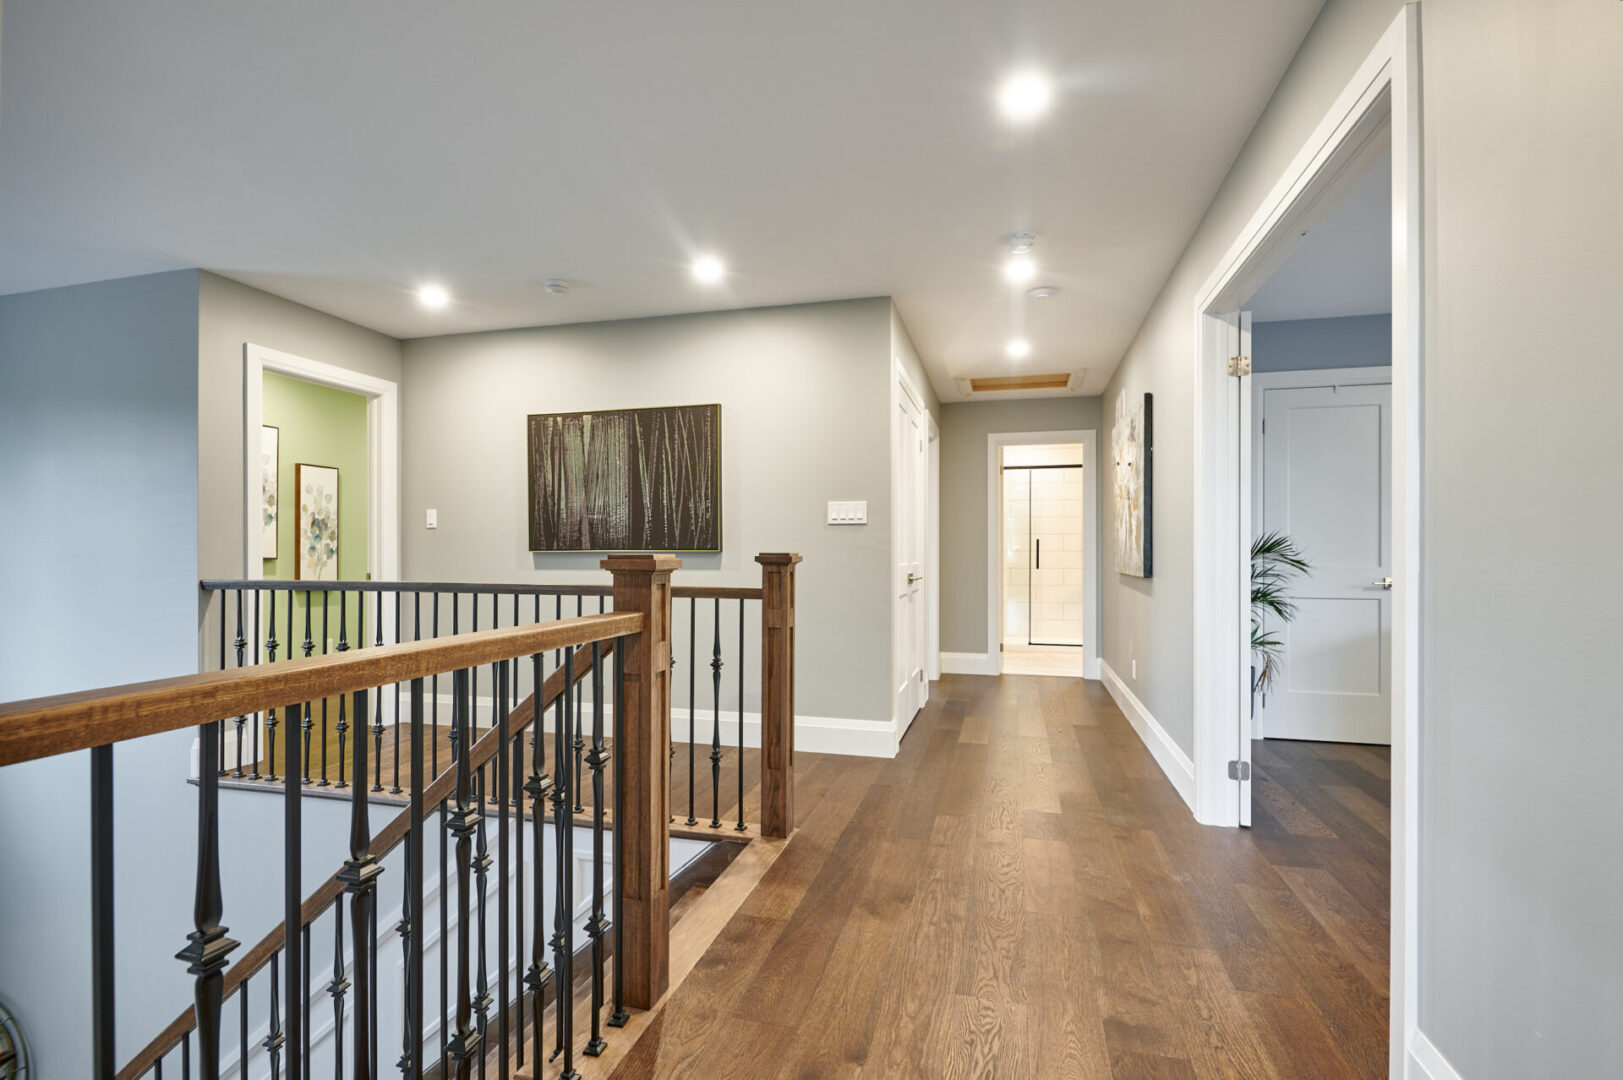 A hallway with hardwood floors and a railing.